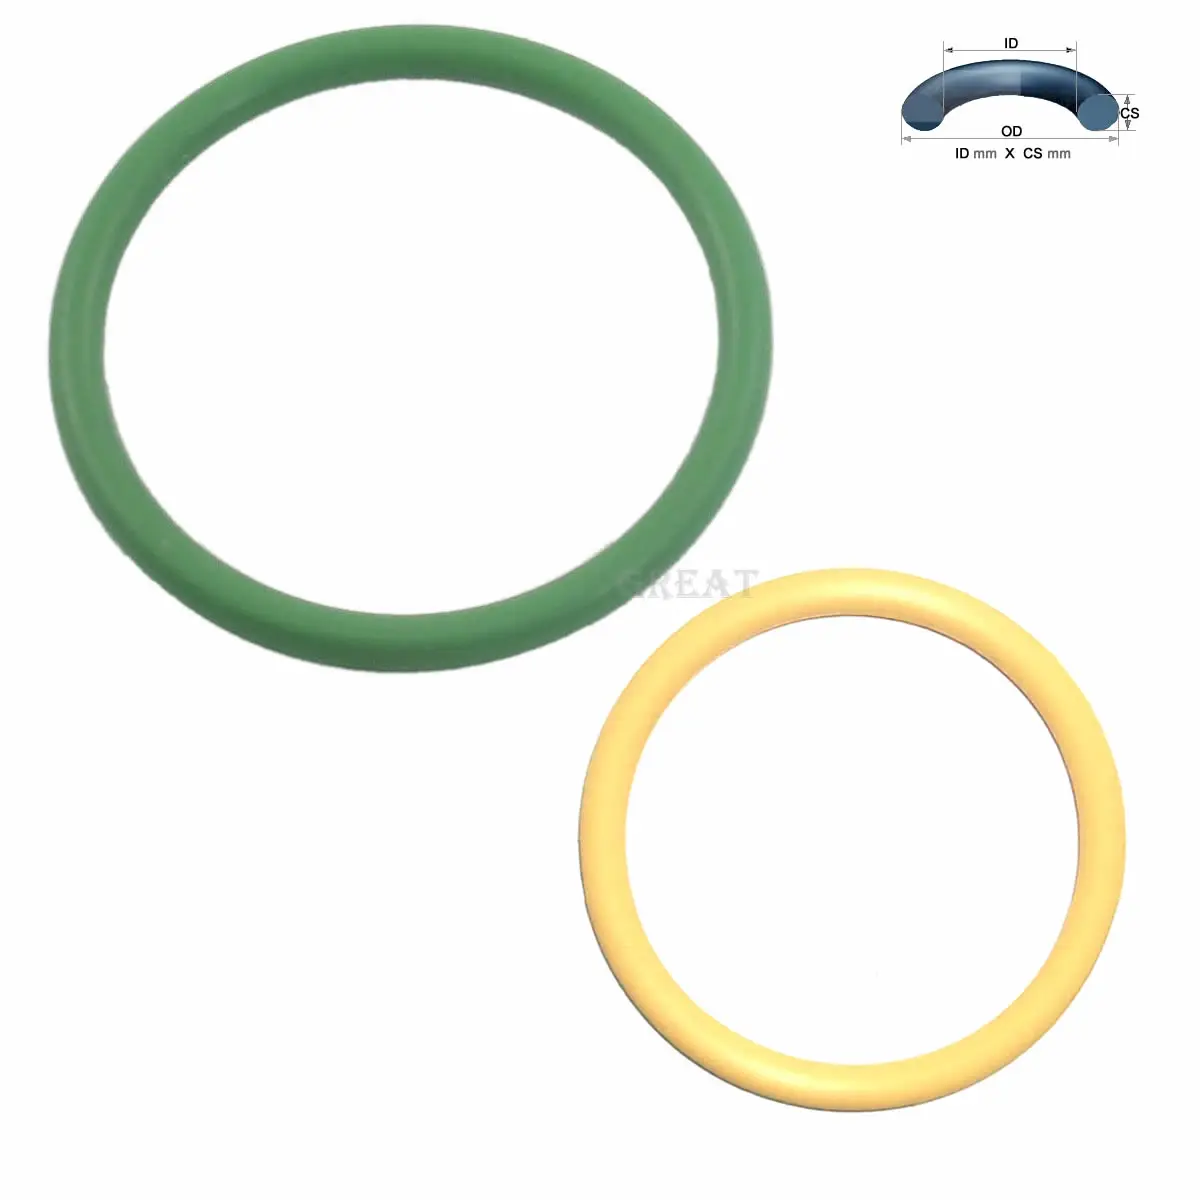 85x4 oring 85mm id x 4mm cs nbr, anel de borracha, vedação de anel o-ring -  AliExpress